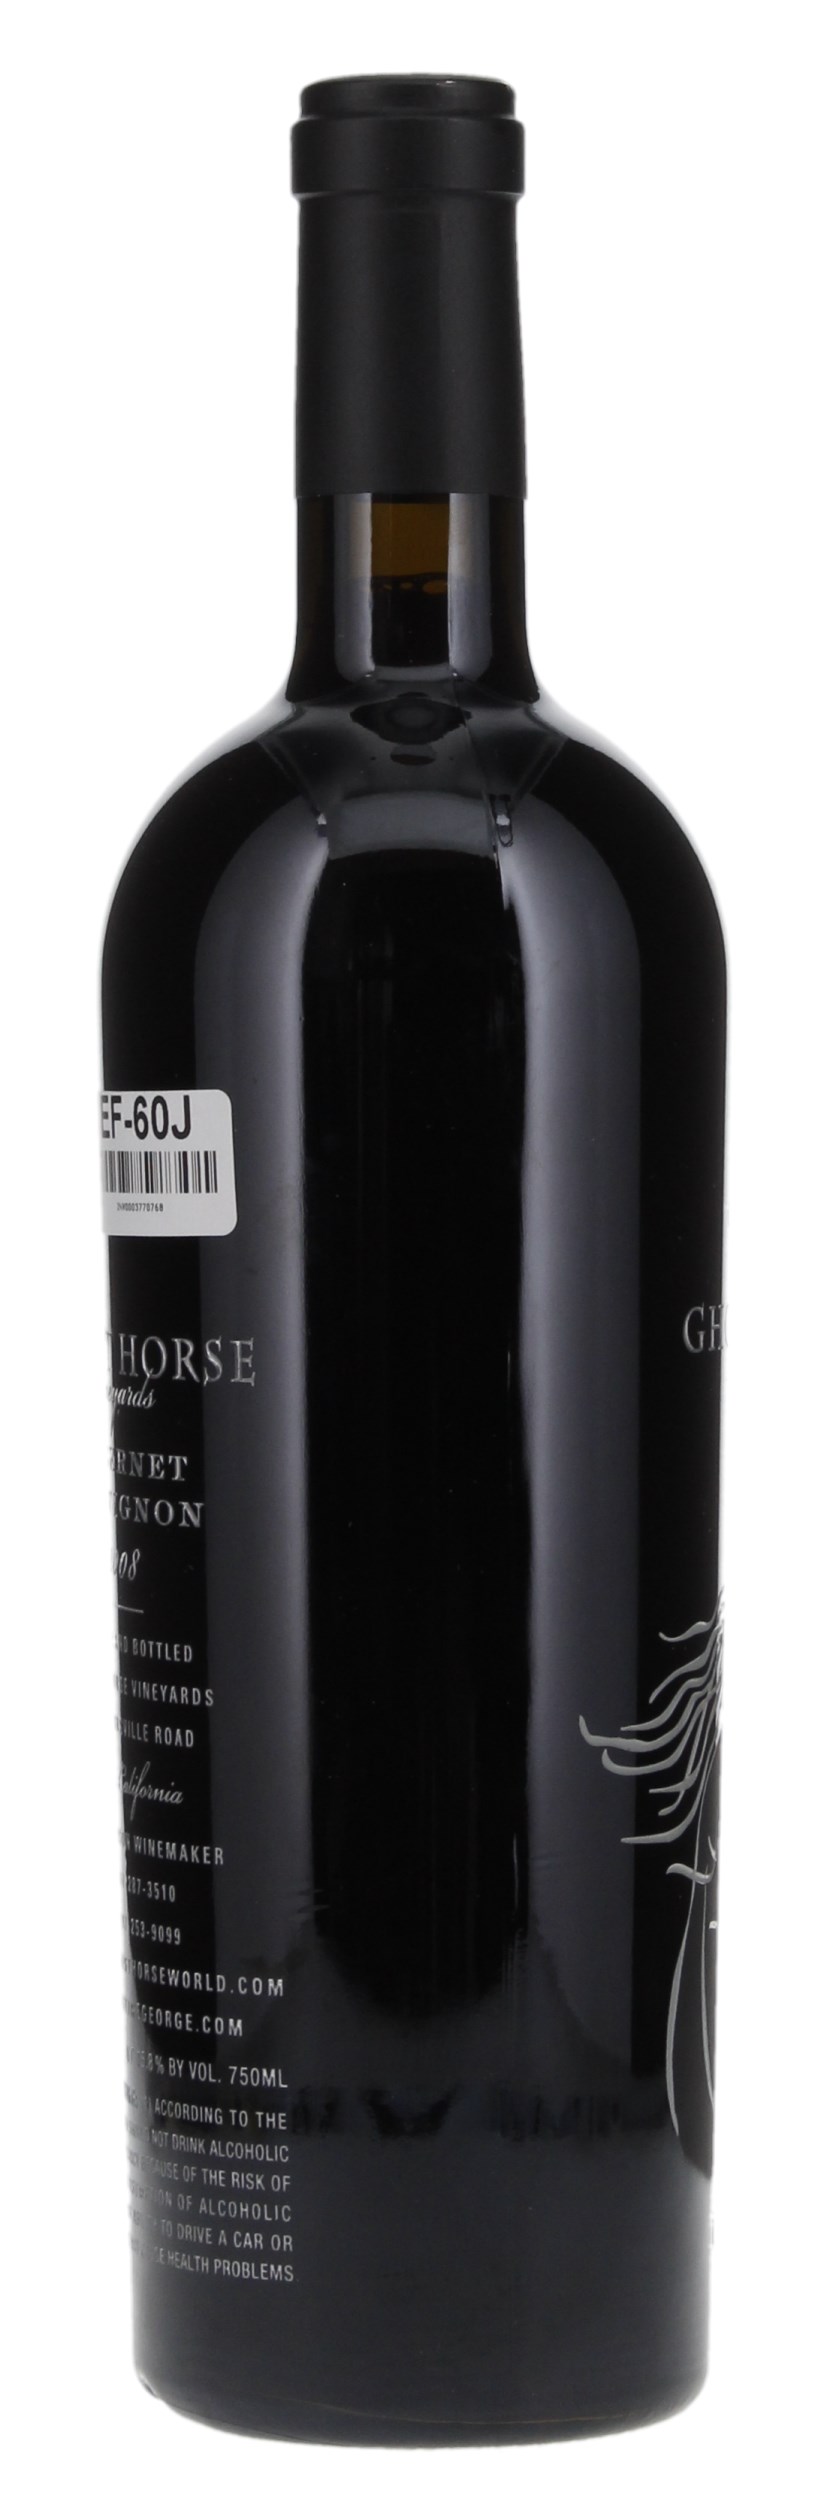 2008 Ghost Horse Vineyard Cabernet Sauvignon, 750ml